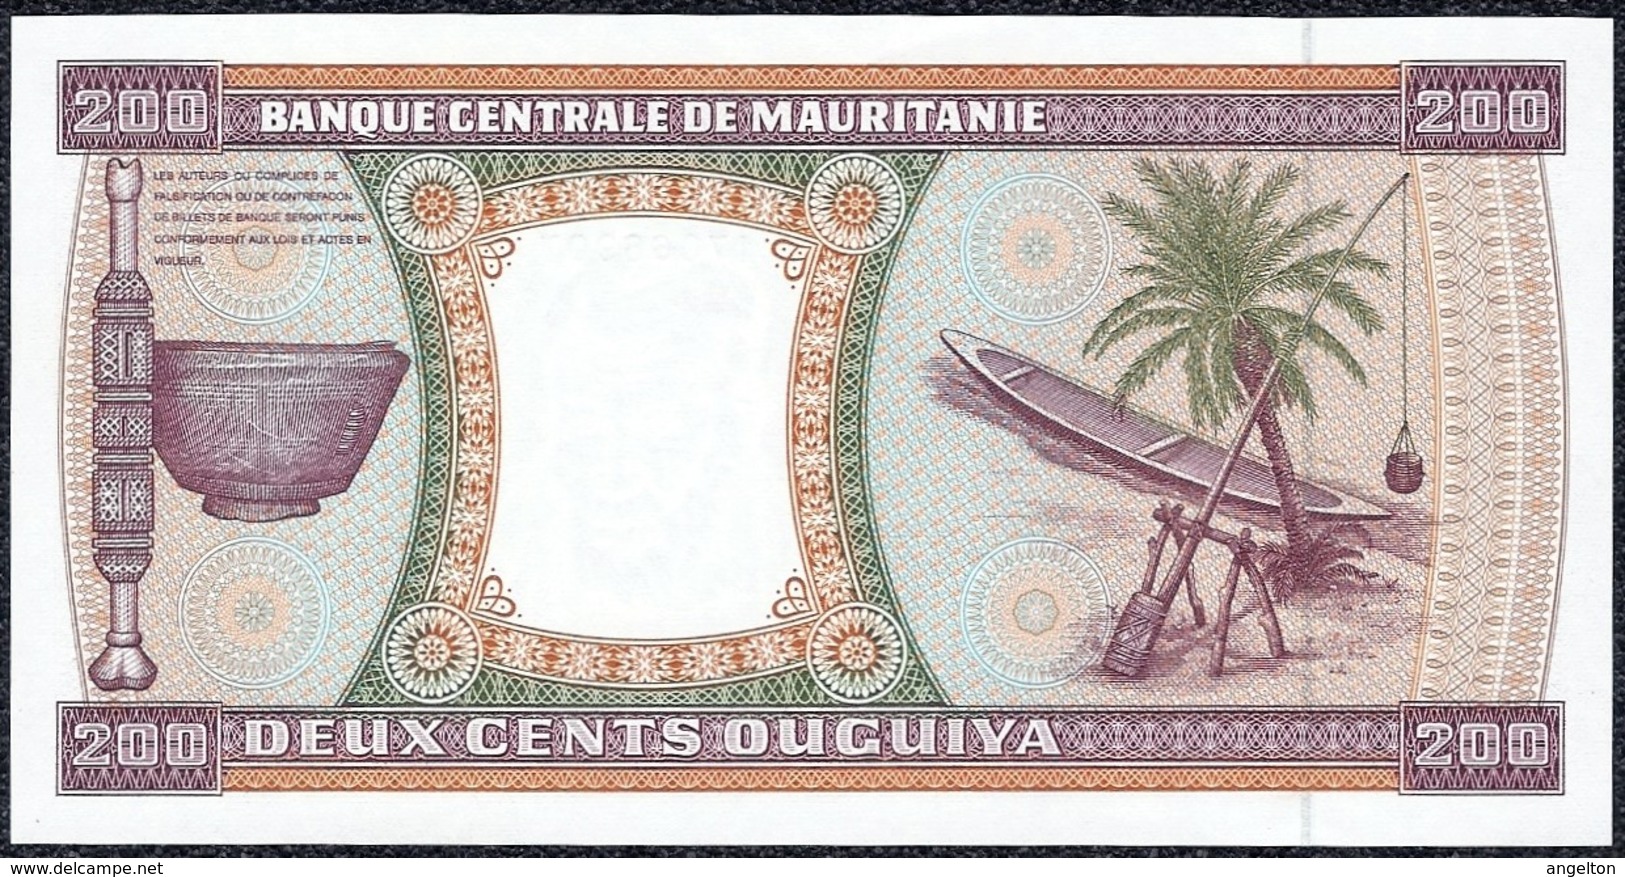 Mauritania 200 Ouguiya 1989 *UNC* Banknote - Mauritania